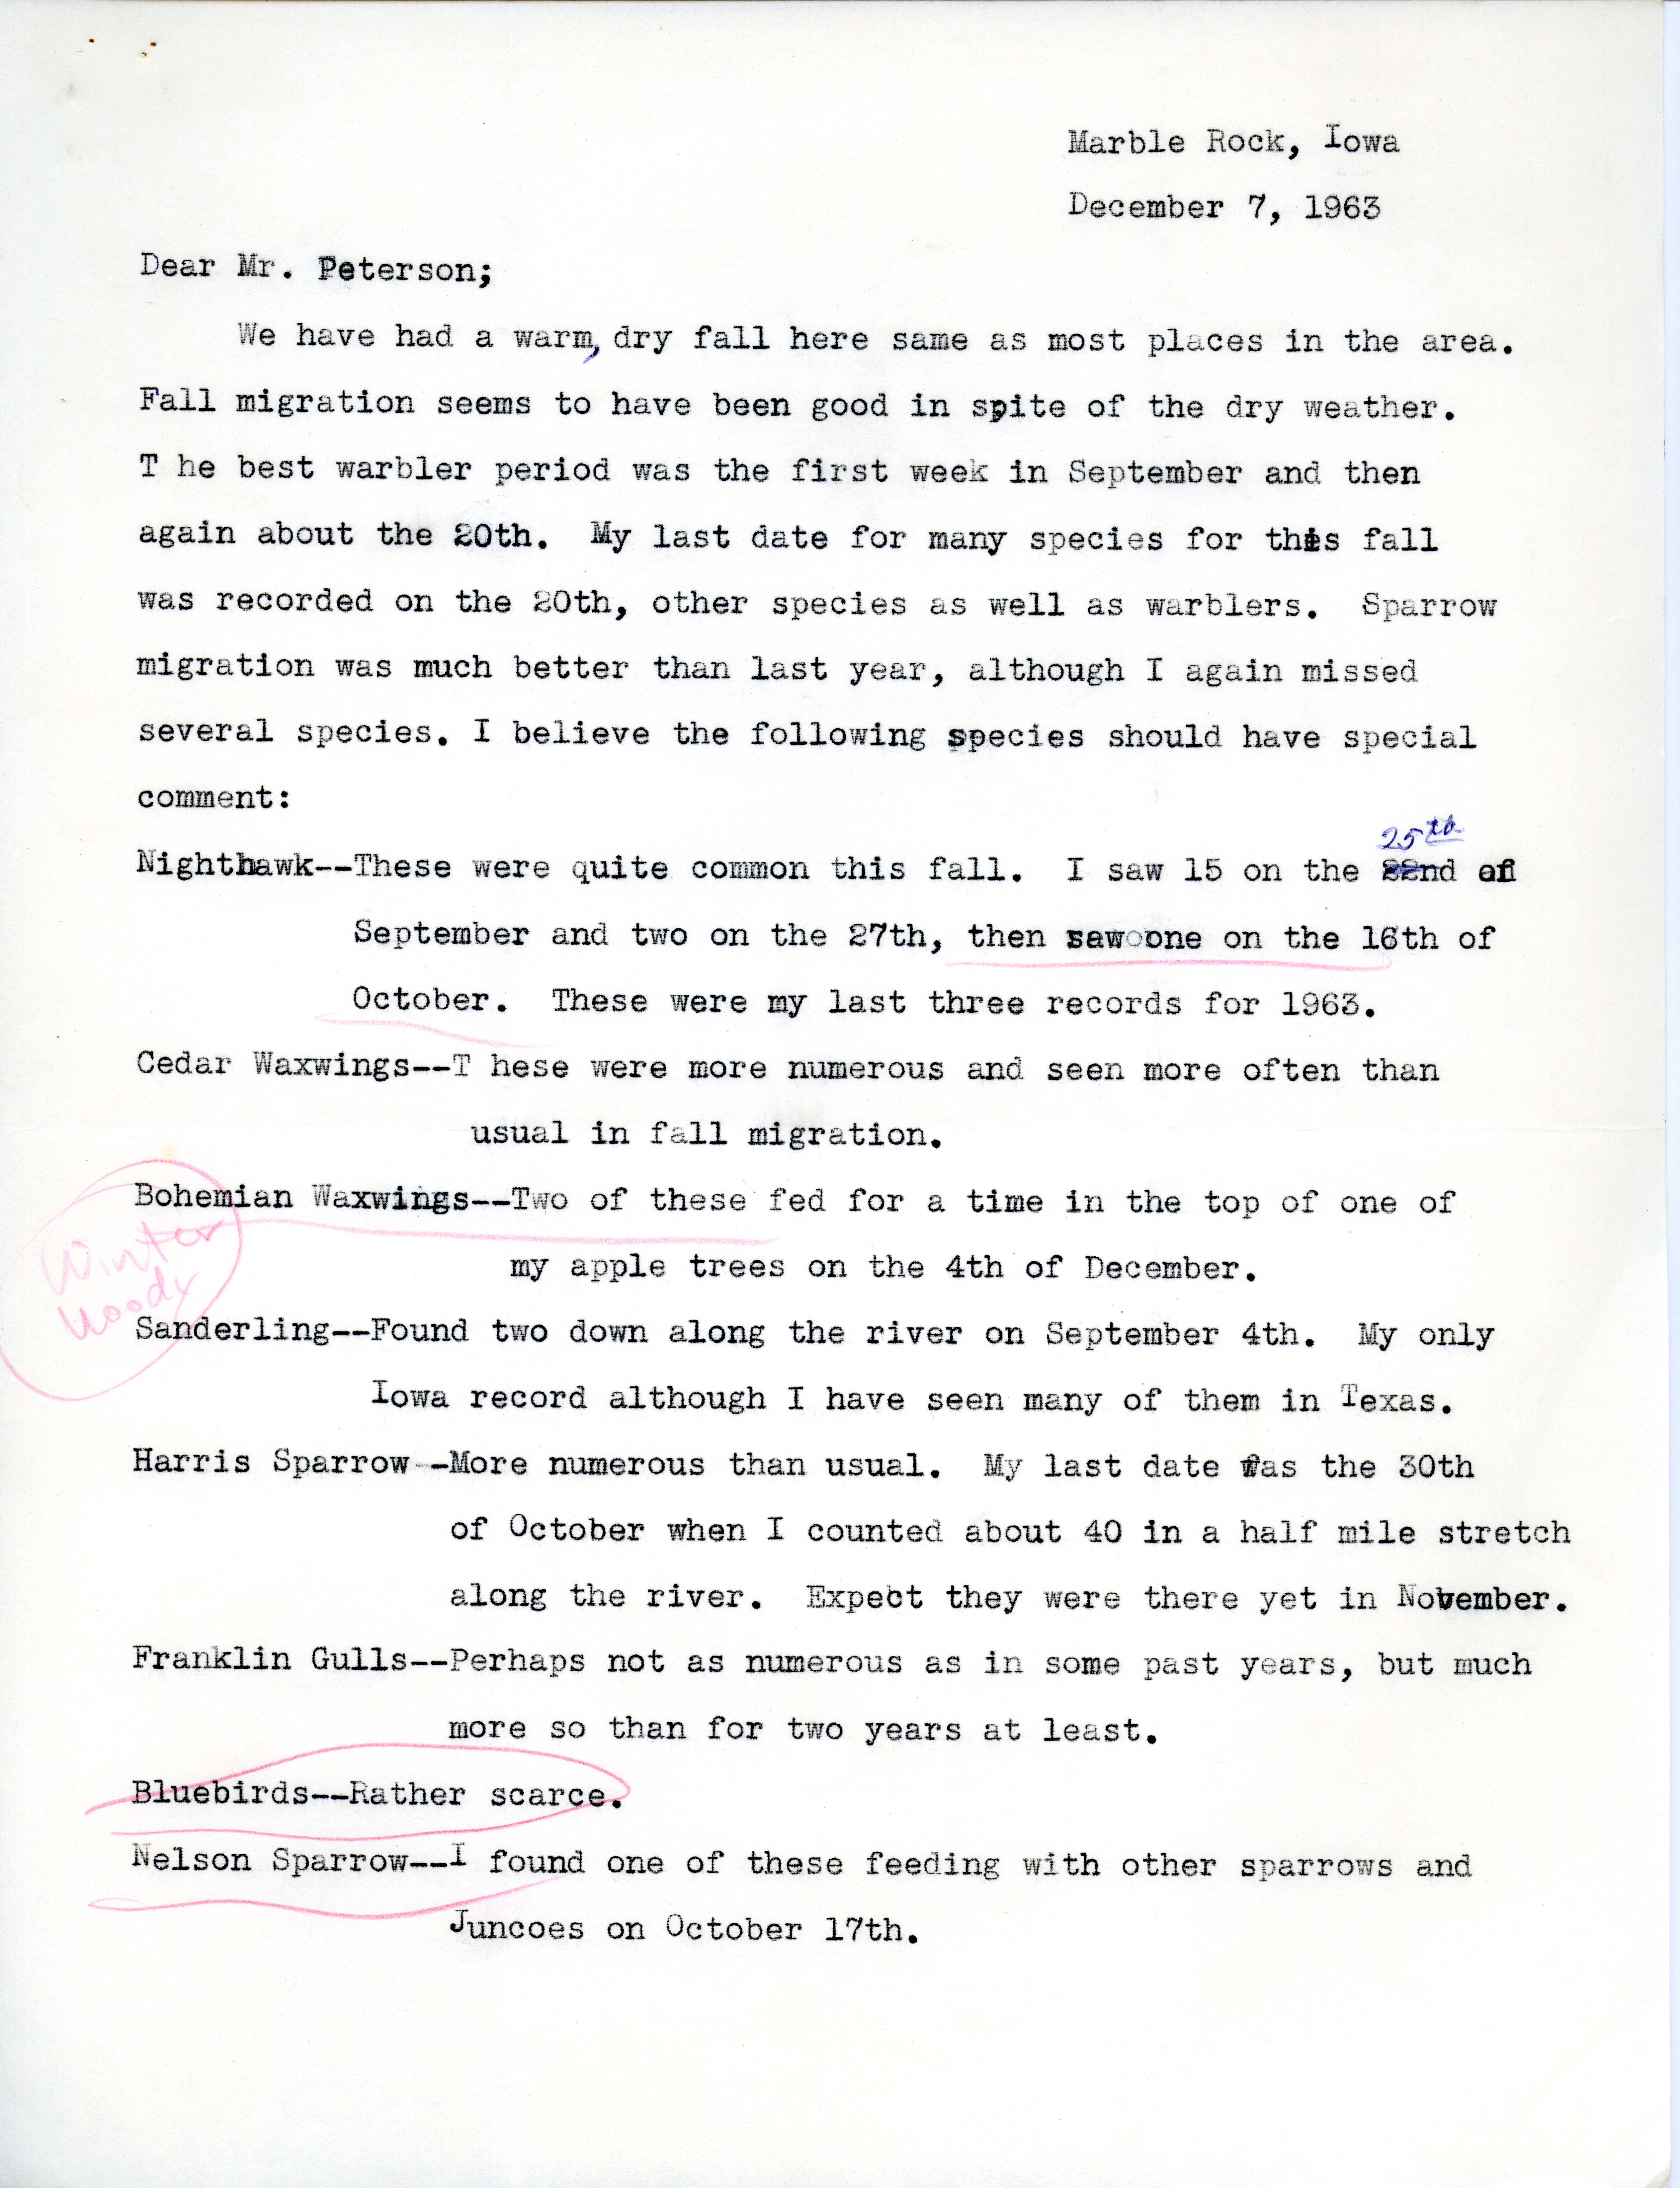 Pearl Knoop letter to Peter C. Petersen regarding bird sightings, December 7, 1963